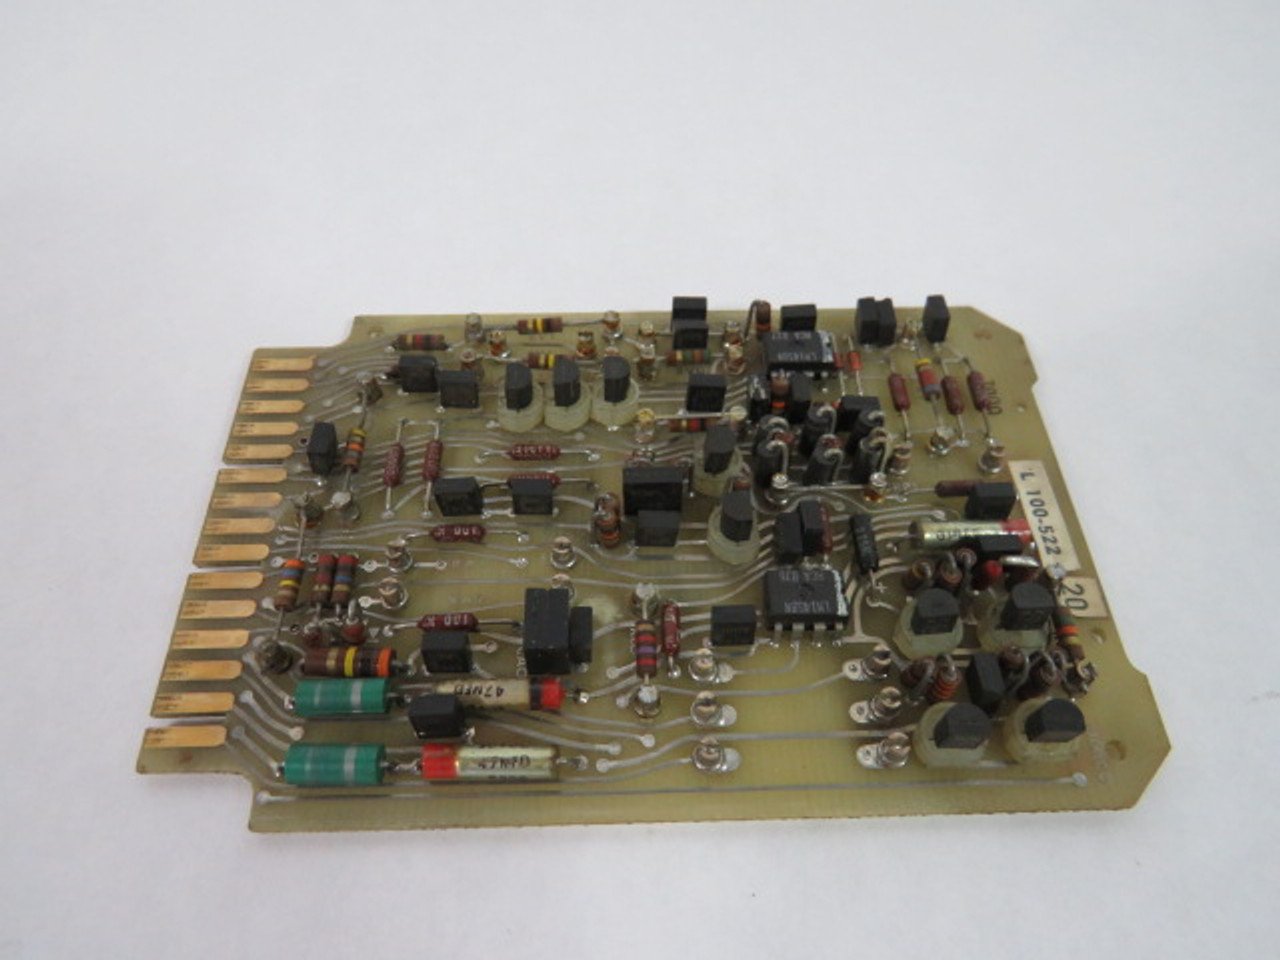 Unico 300-792-J L100-522 Power Supply Circuit Board USED